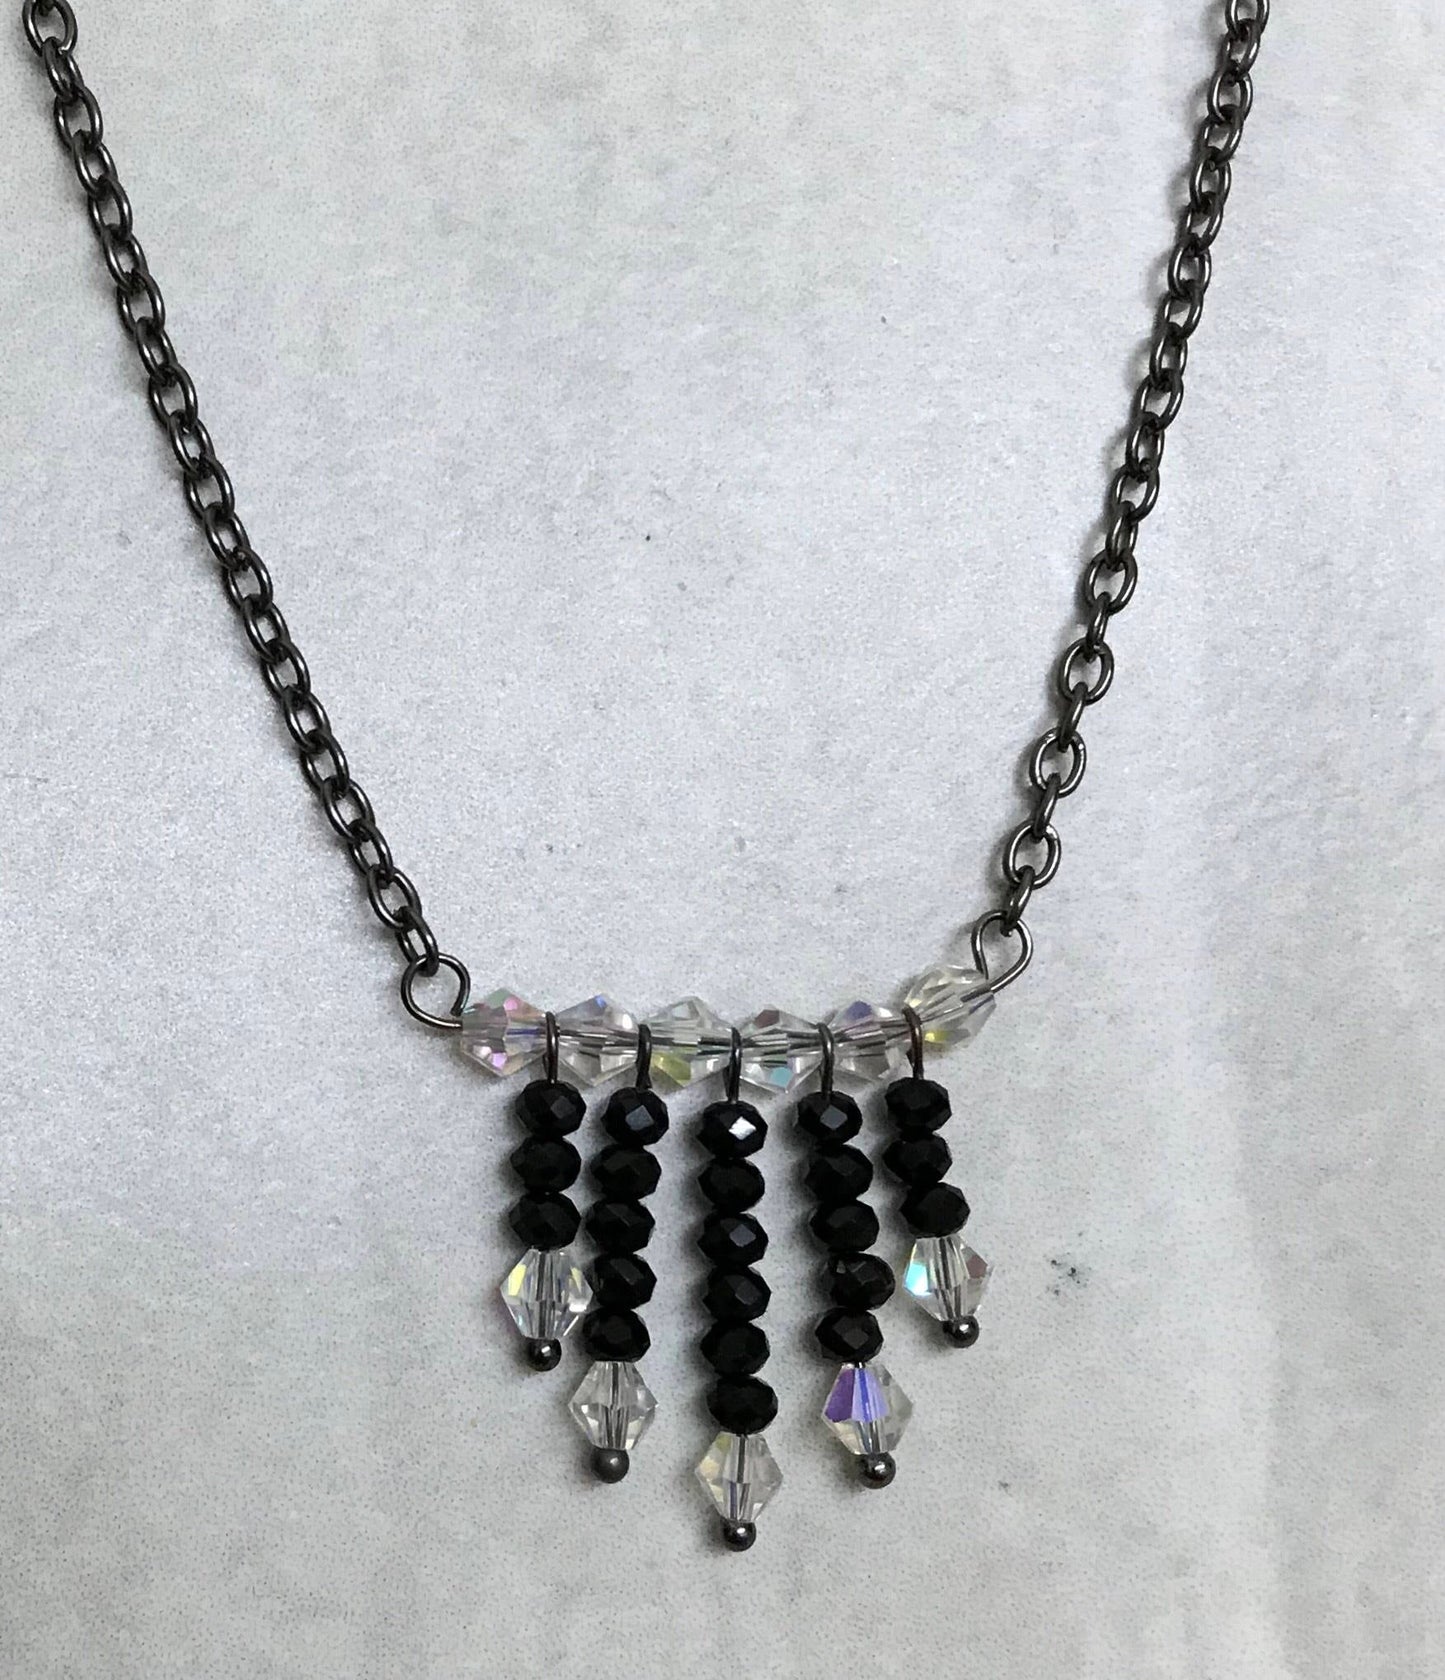 Black spinel Gemstone & AB Swarovski Crystal waterfall necklace set